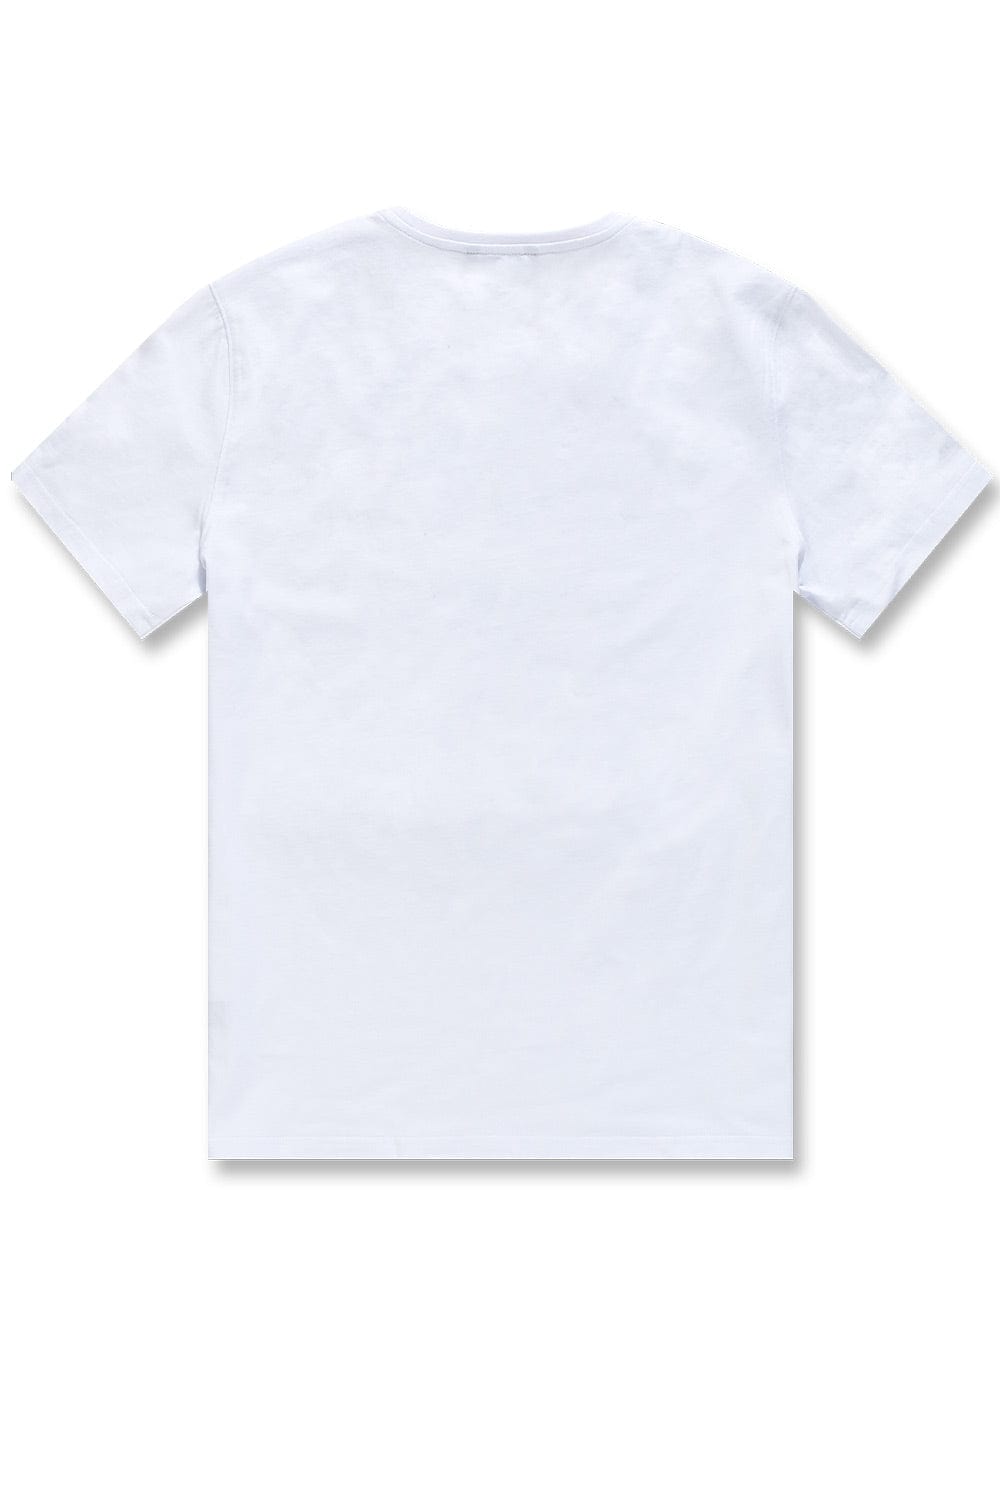 Jordan Craig Les Paradis T-Shirt (White)